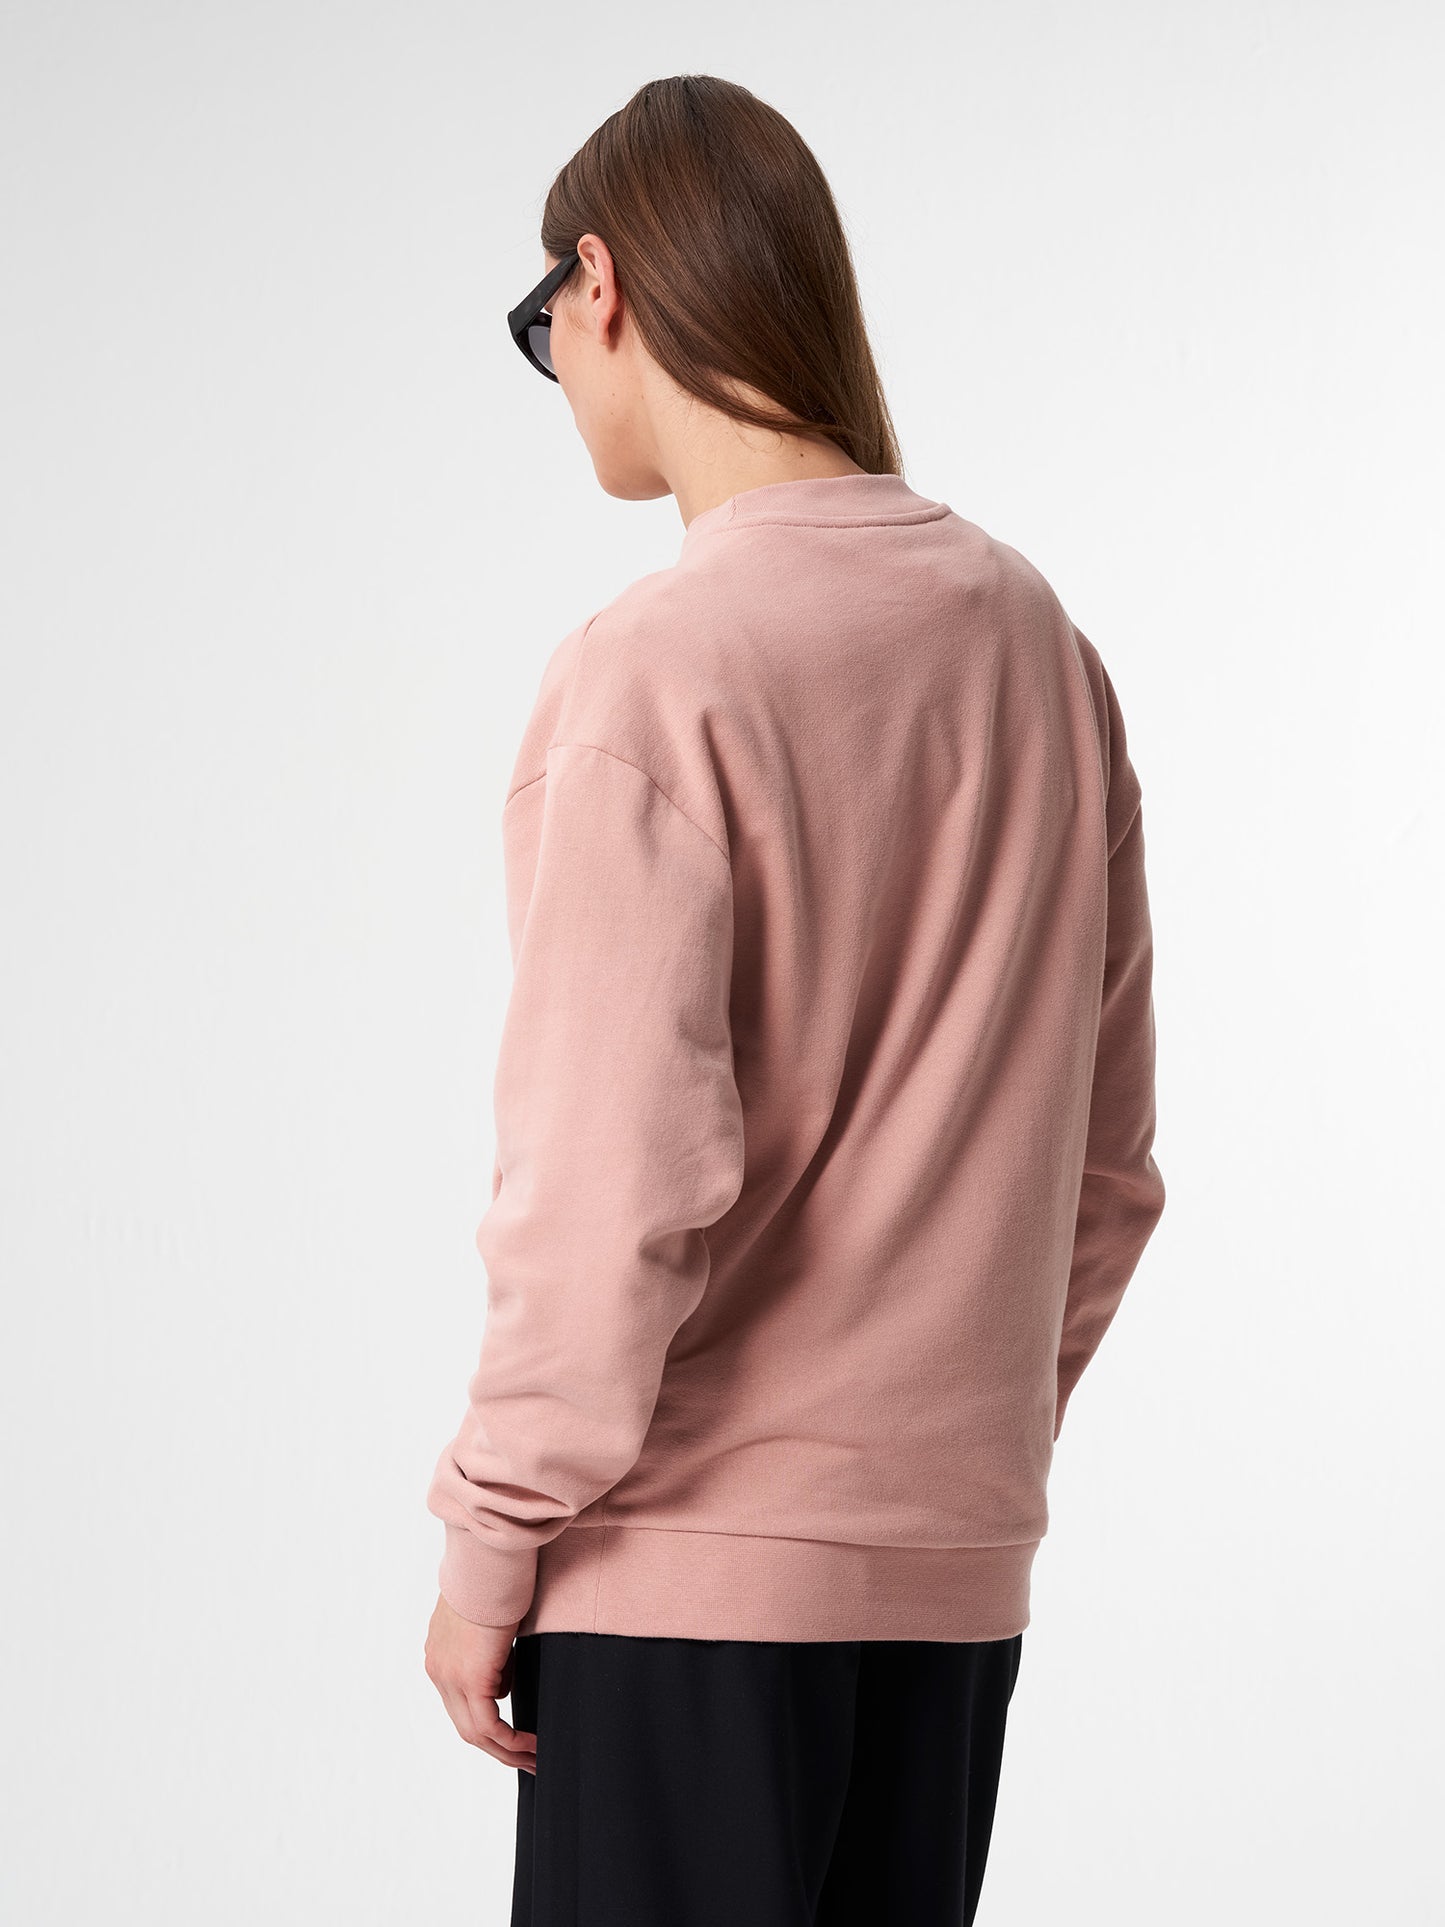 pinqponq-Sweatshirt-Unisex-Ash-Pink-model-back